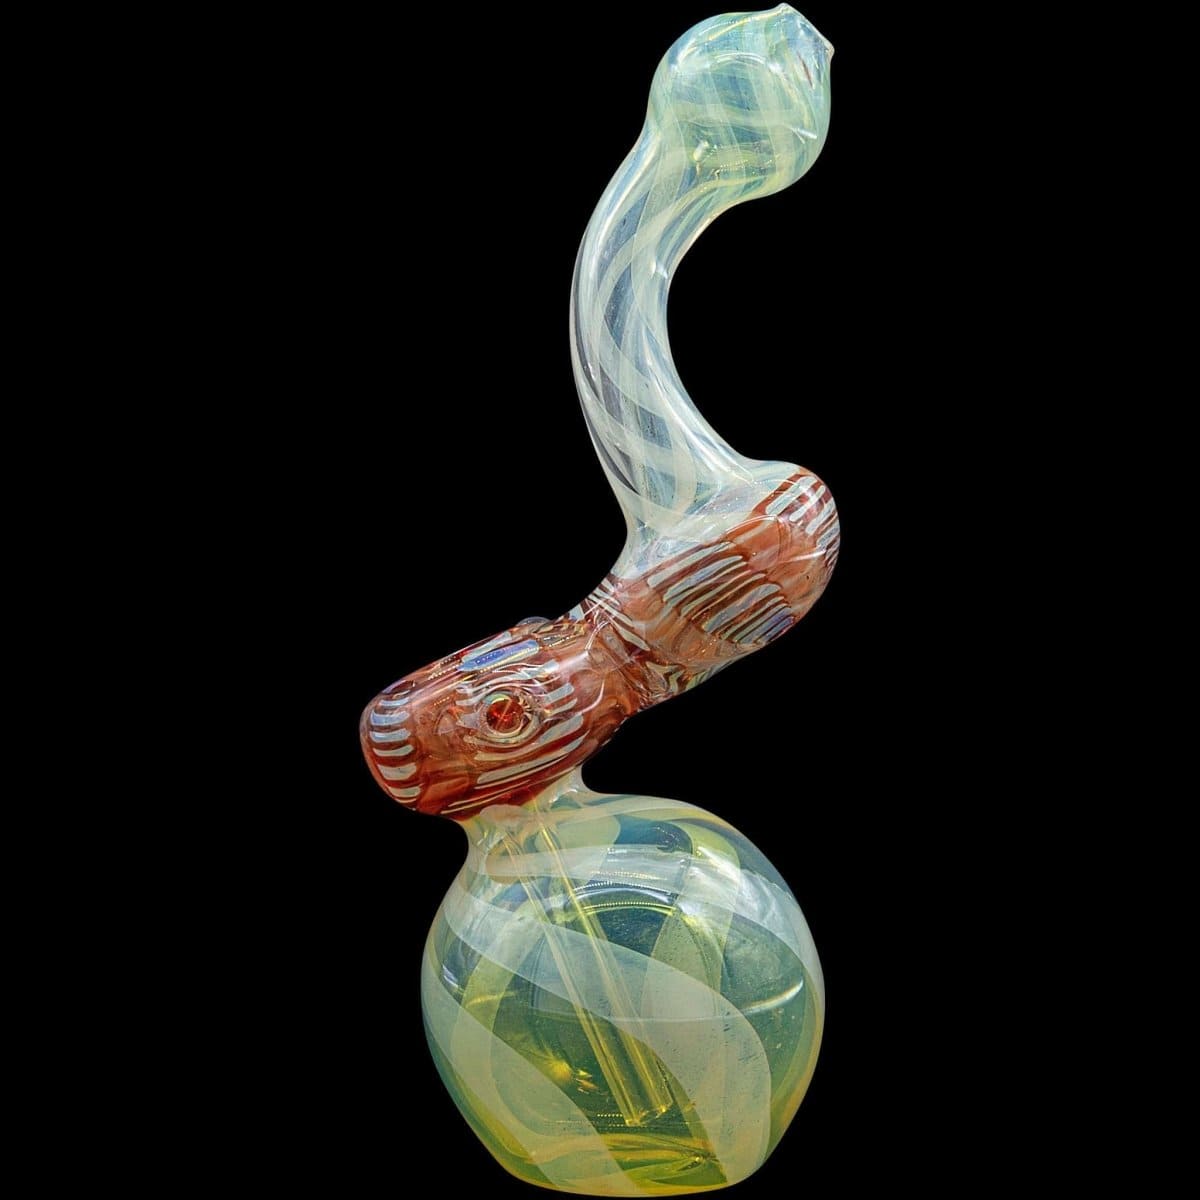 LA Pipes Bubbler "Rake Bubb" Fumed Sherlock Bubbler Pipe (Various Colors)